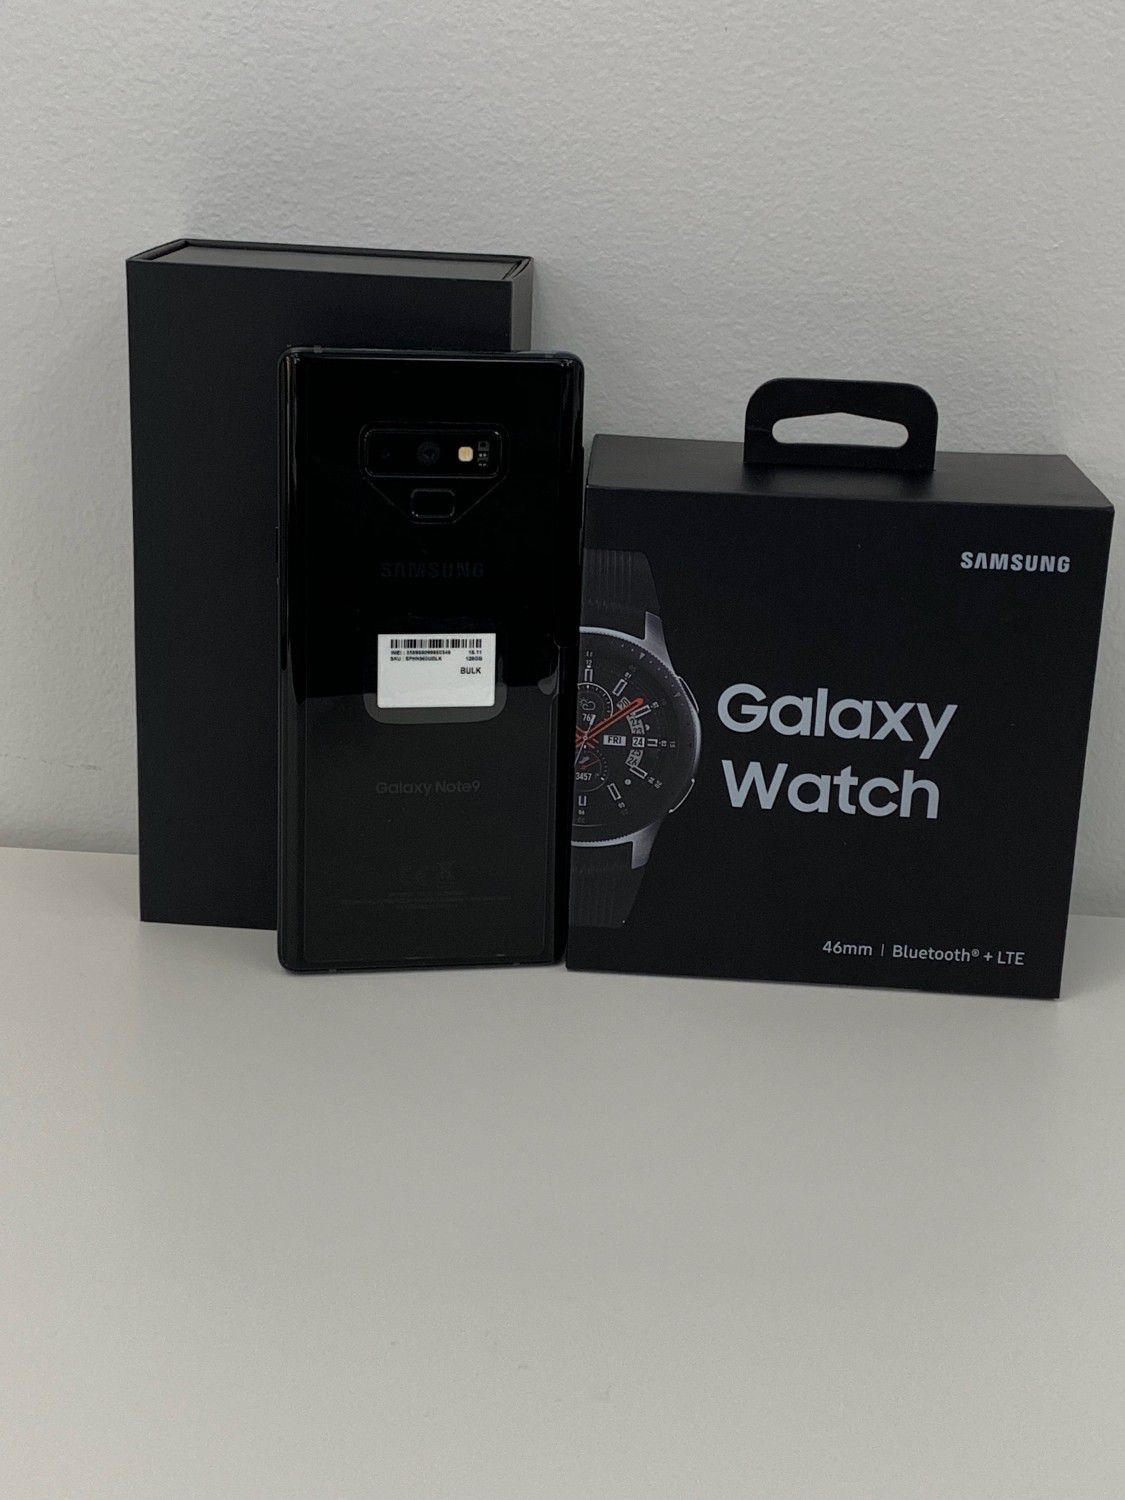 Galaxy watch and samsung S9